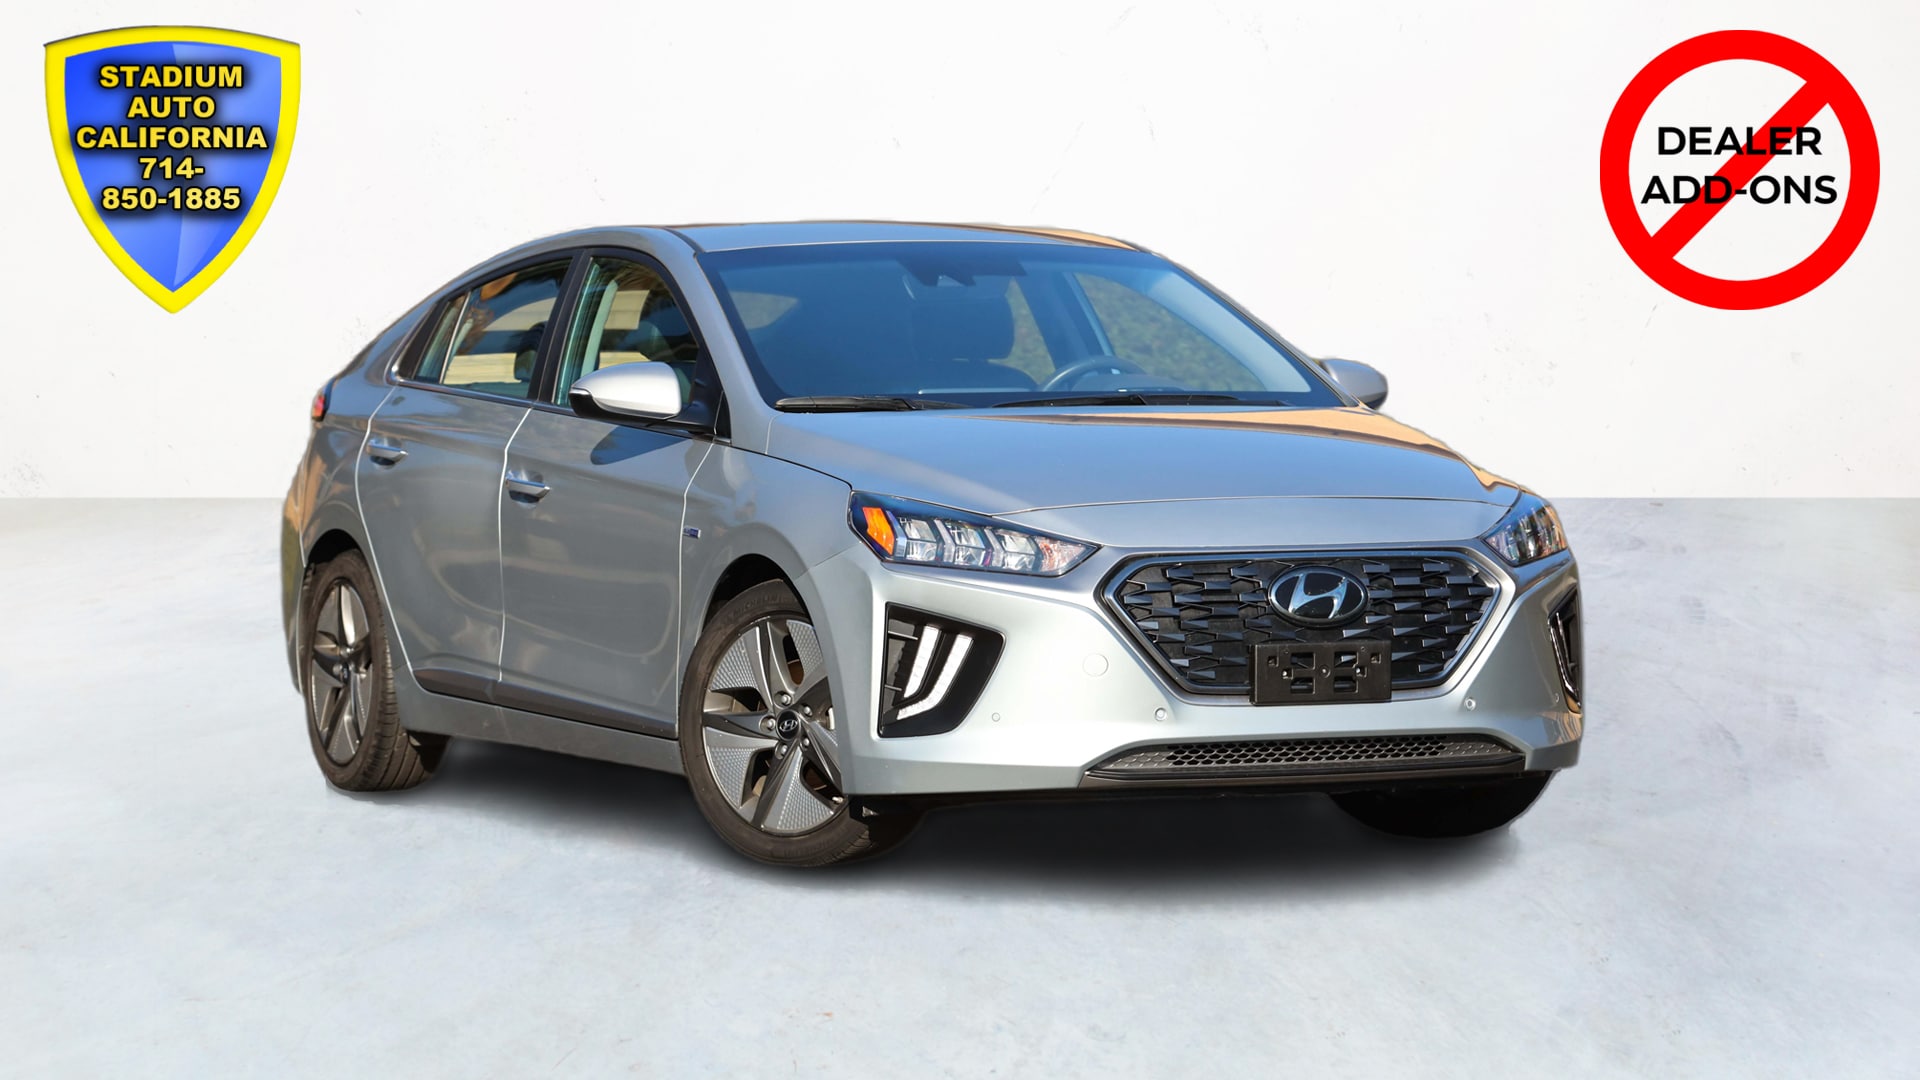 Used 2020 Hyundai Ioniq Hybrid For Sale at Stadium Auto California | VIN:  KMHC05LC5LU235017